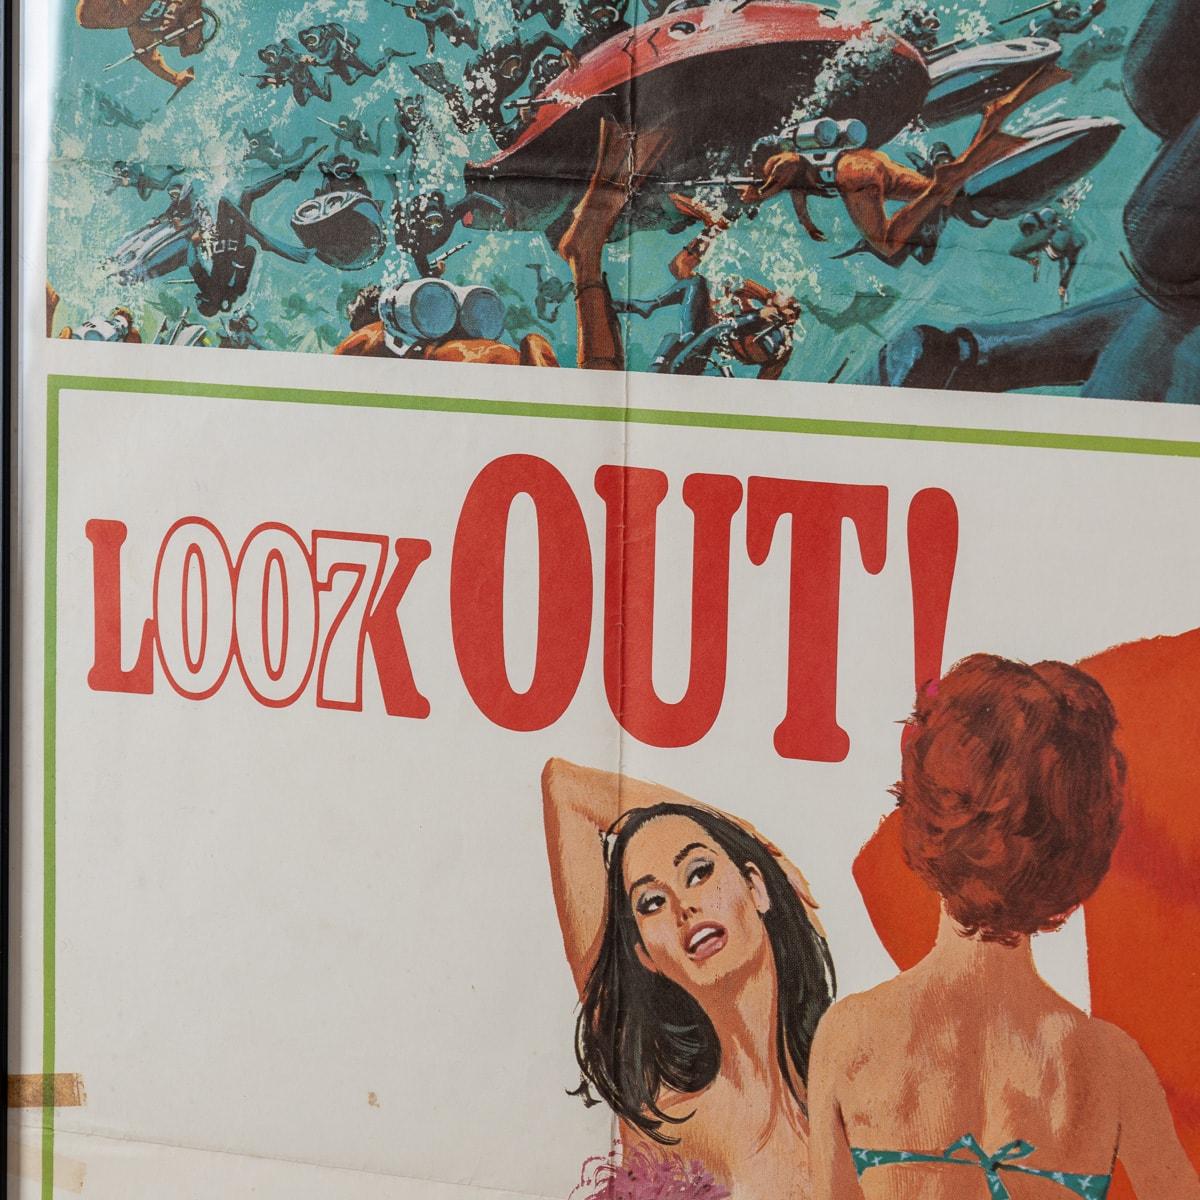 Original U.S James Bond 007 'Thunderball' Poster c.1965 For Sale 3